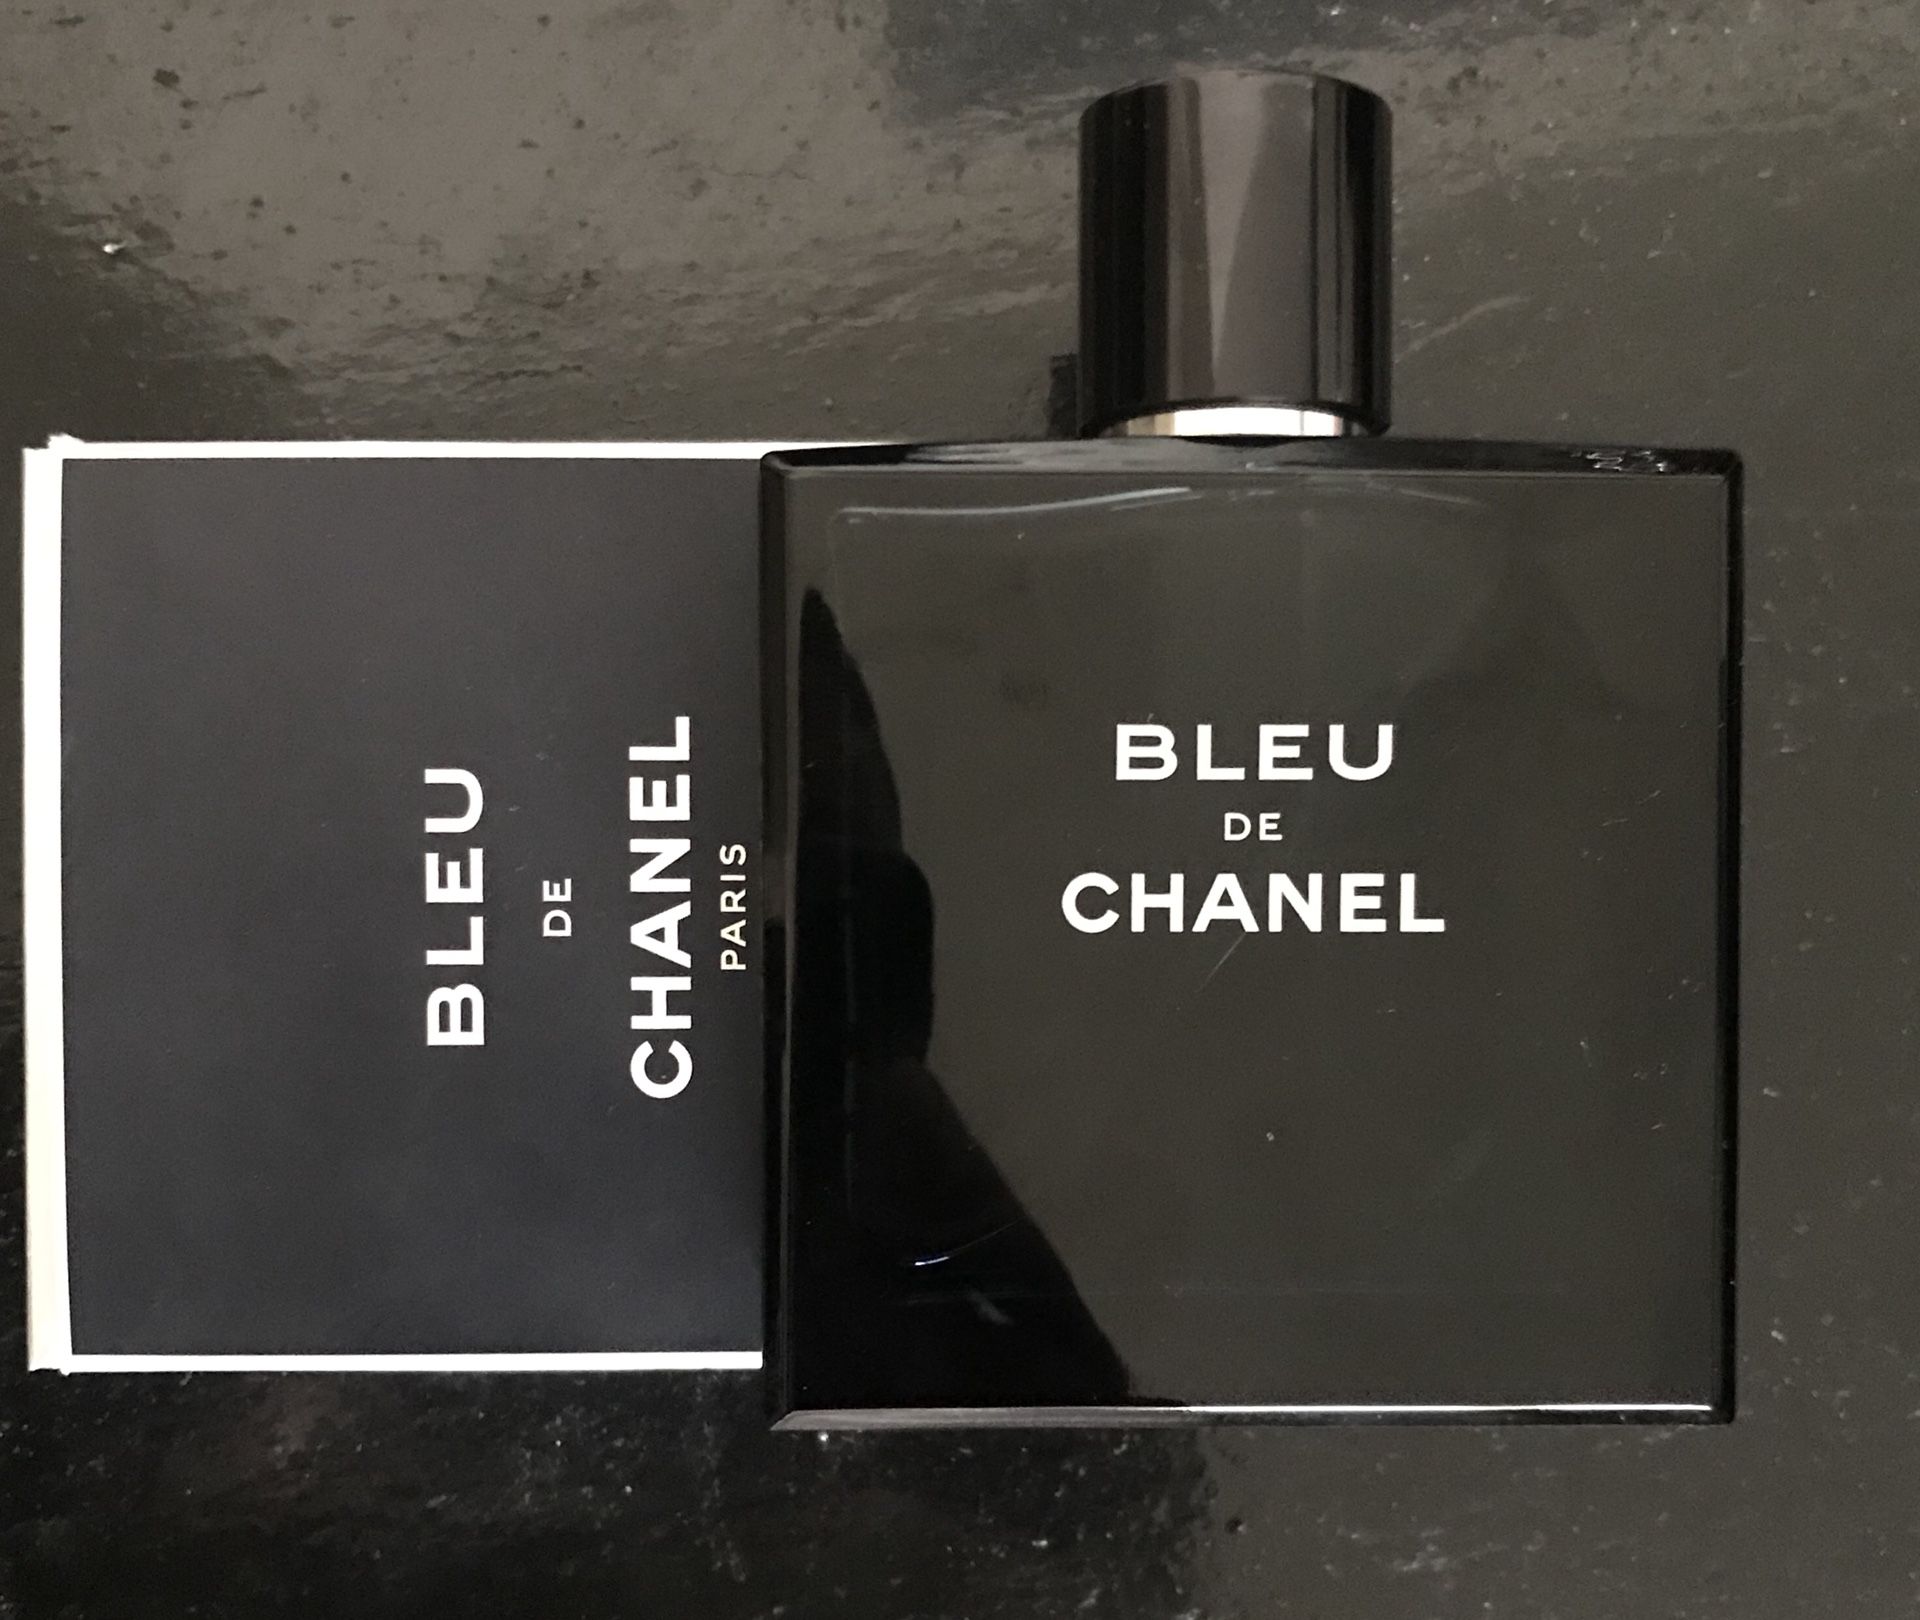 Men's Cologne Bleu Chanel 3.4 oz batch code 0902 for Sale in Hampton, VA -  OfferUp